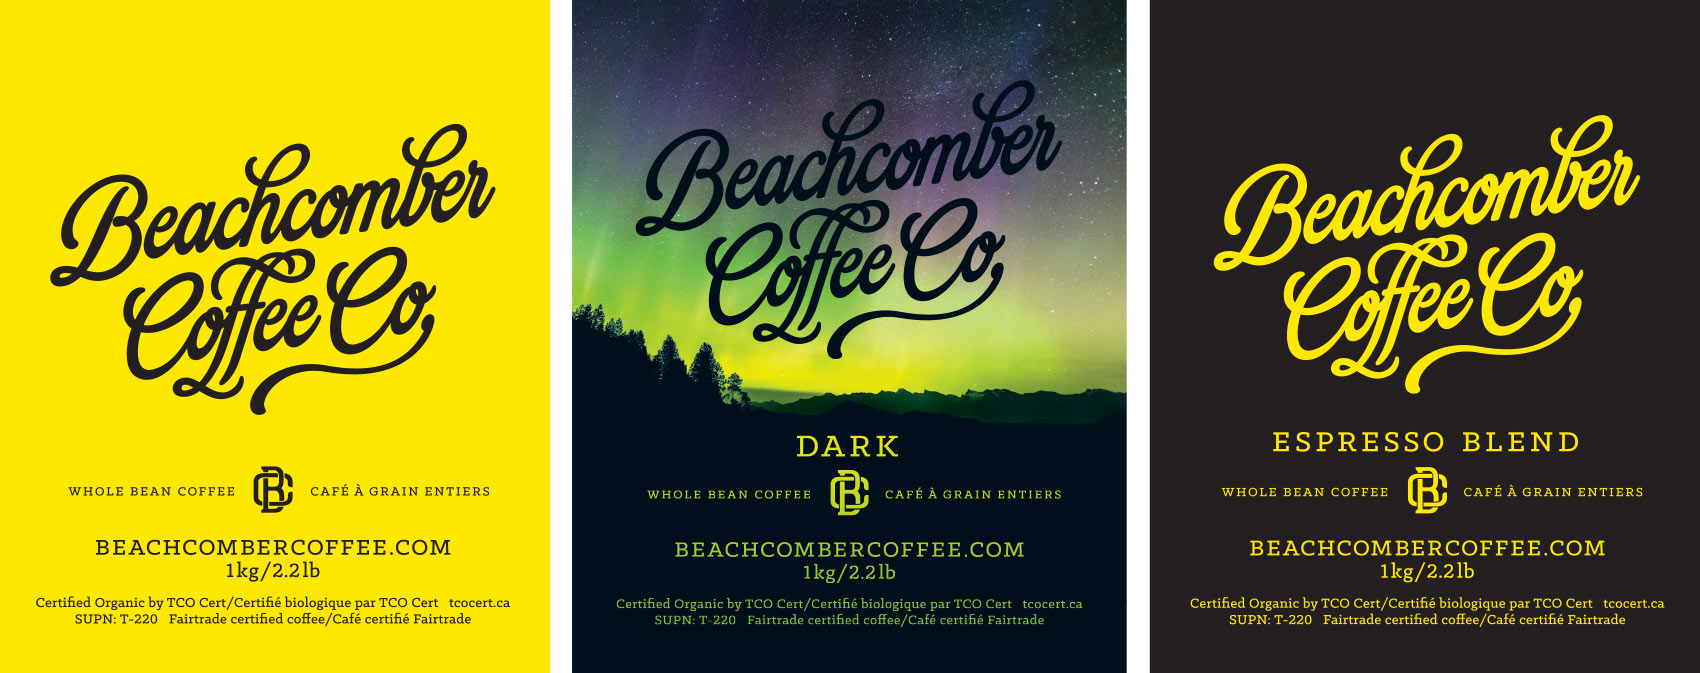 Beachcomber_coffee_bag_art.jpg